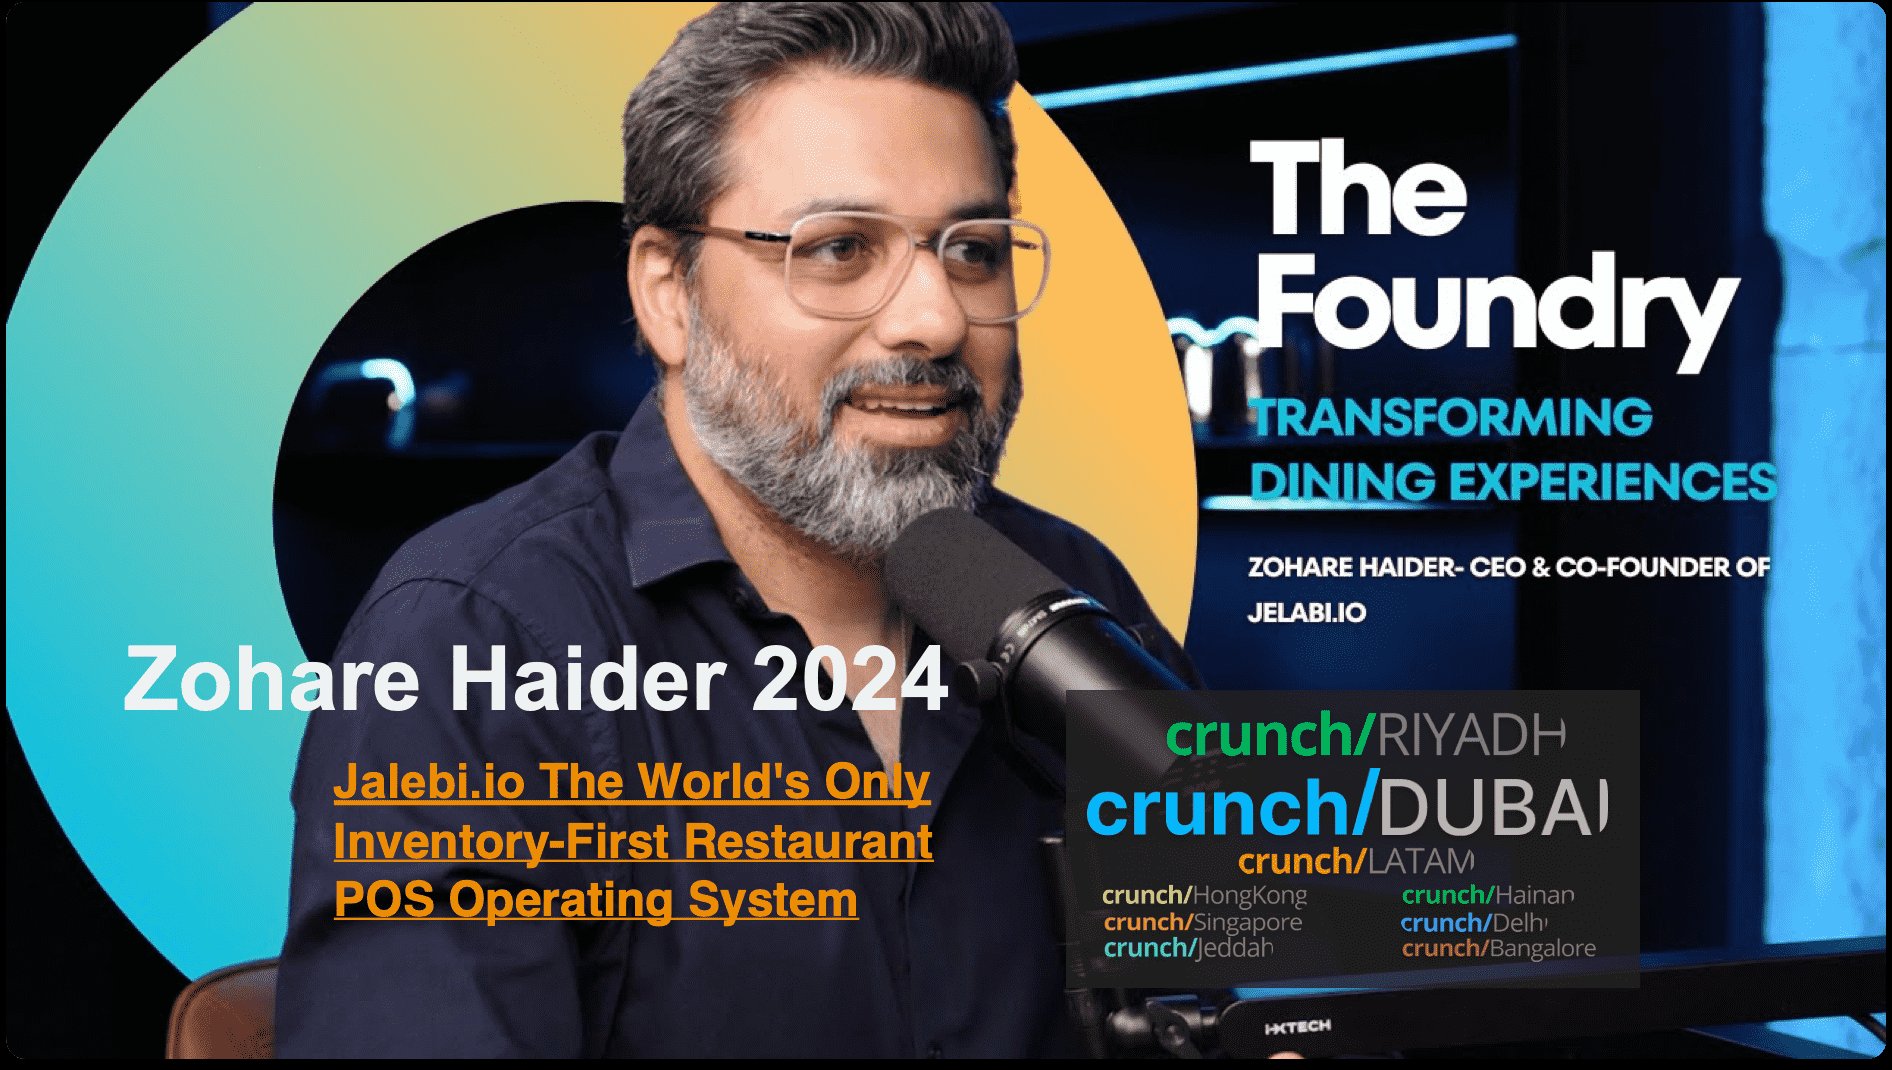 Ресторан Zohare Haider 2024 Crunch в Дубае, ПОЗ.